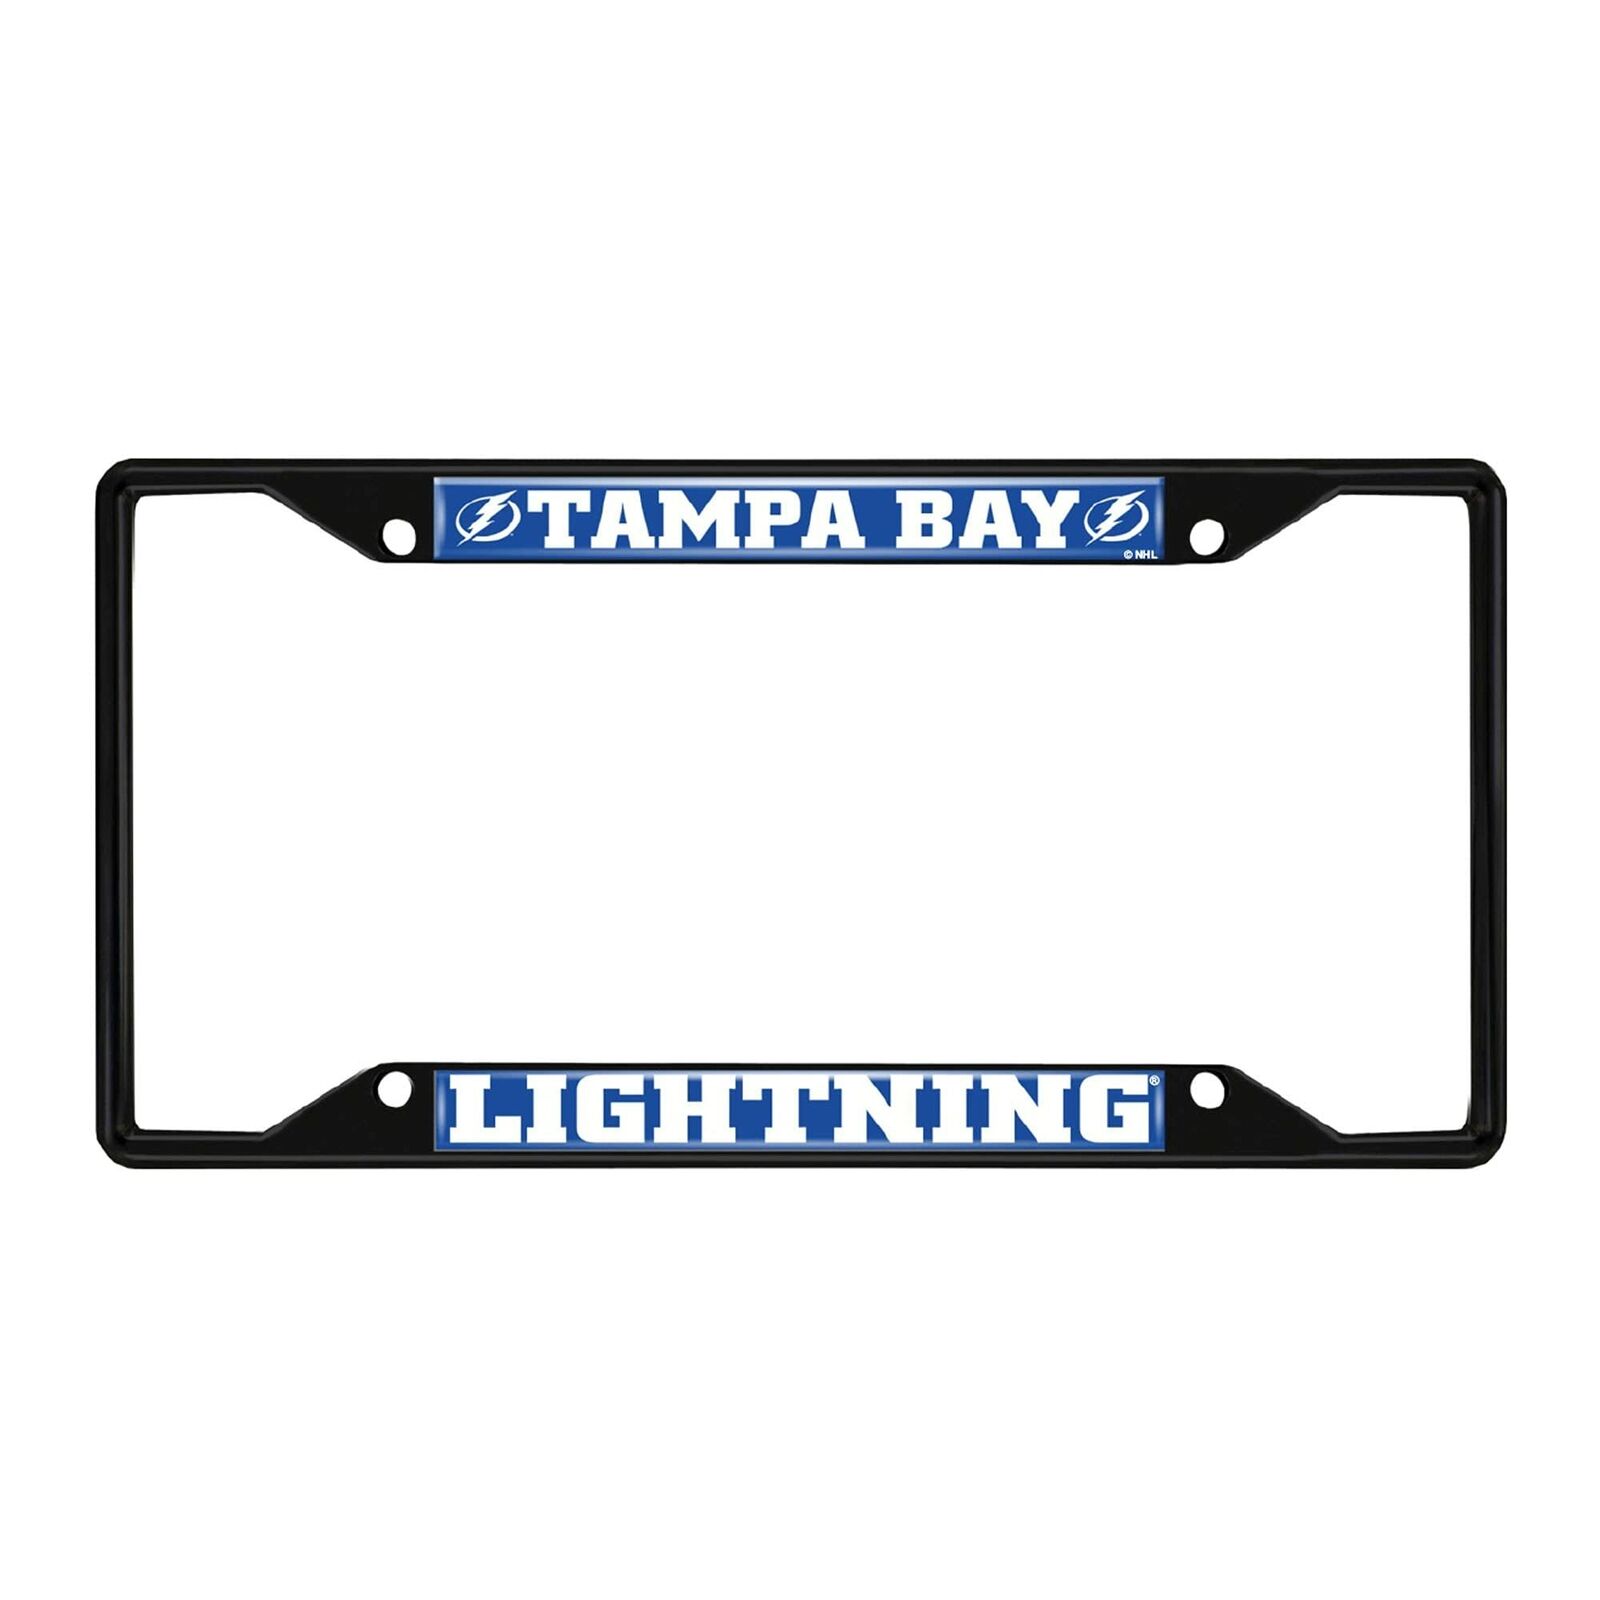 FANMATS 31392 Tampa Bay Lightning Metal License Plate Frame Black Finish